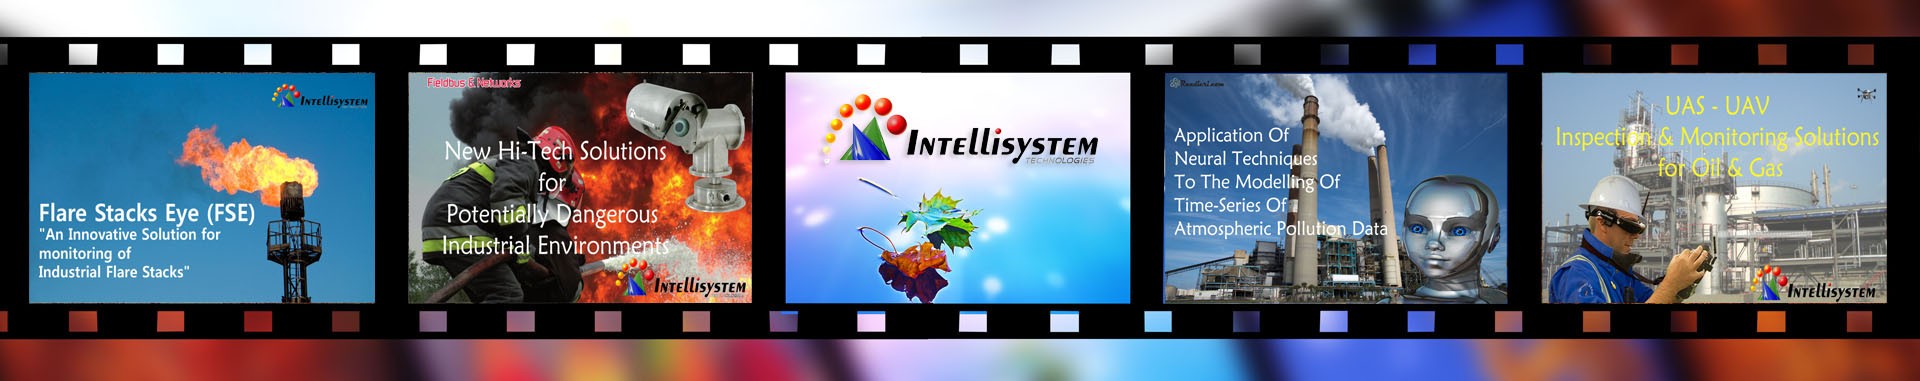 video Gallery Intellisystem Technologies